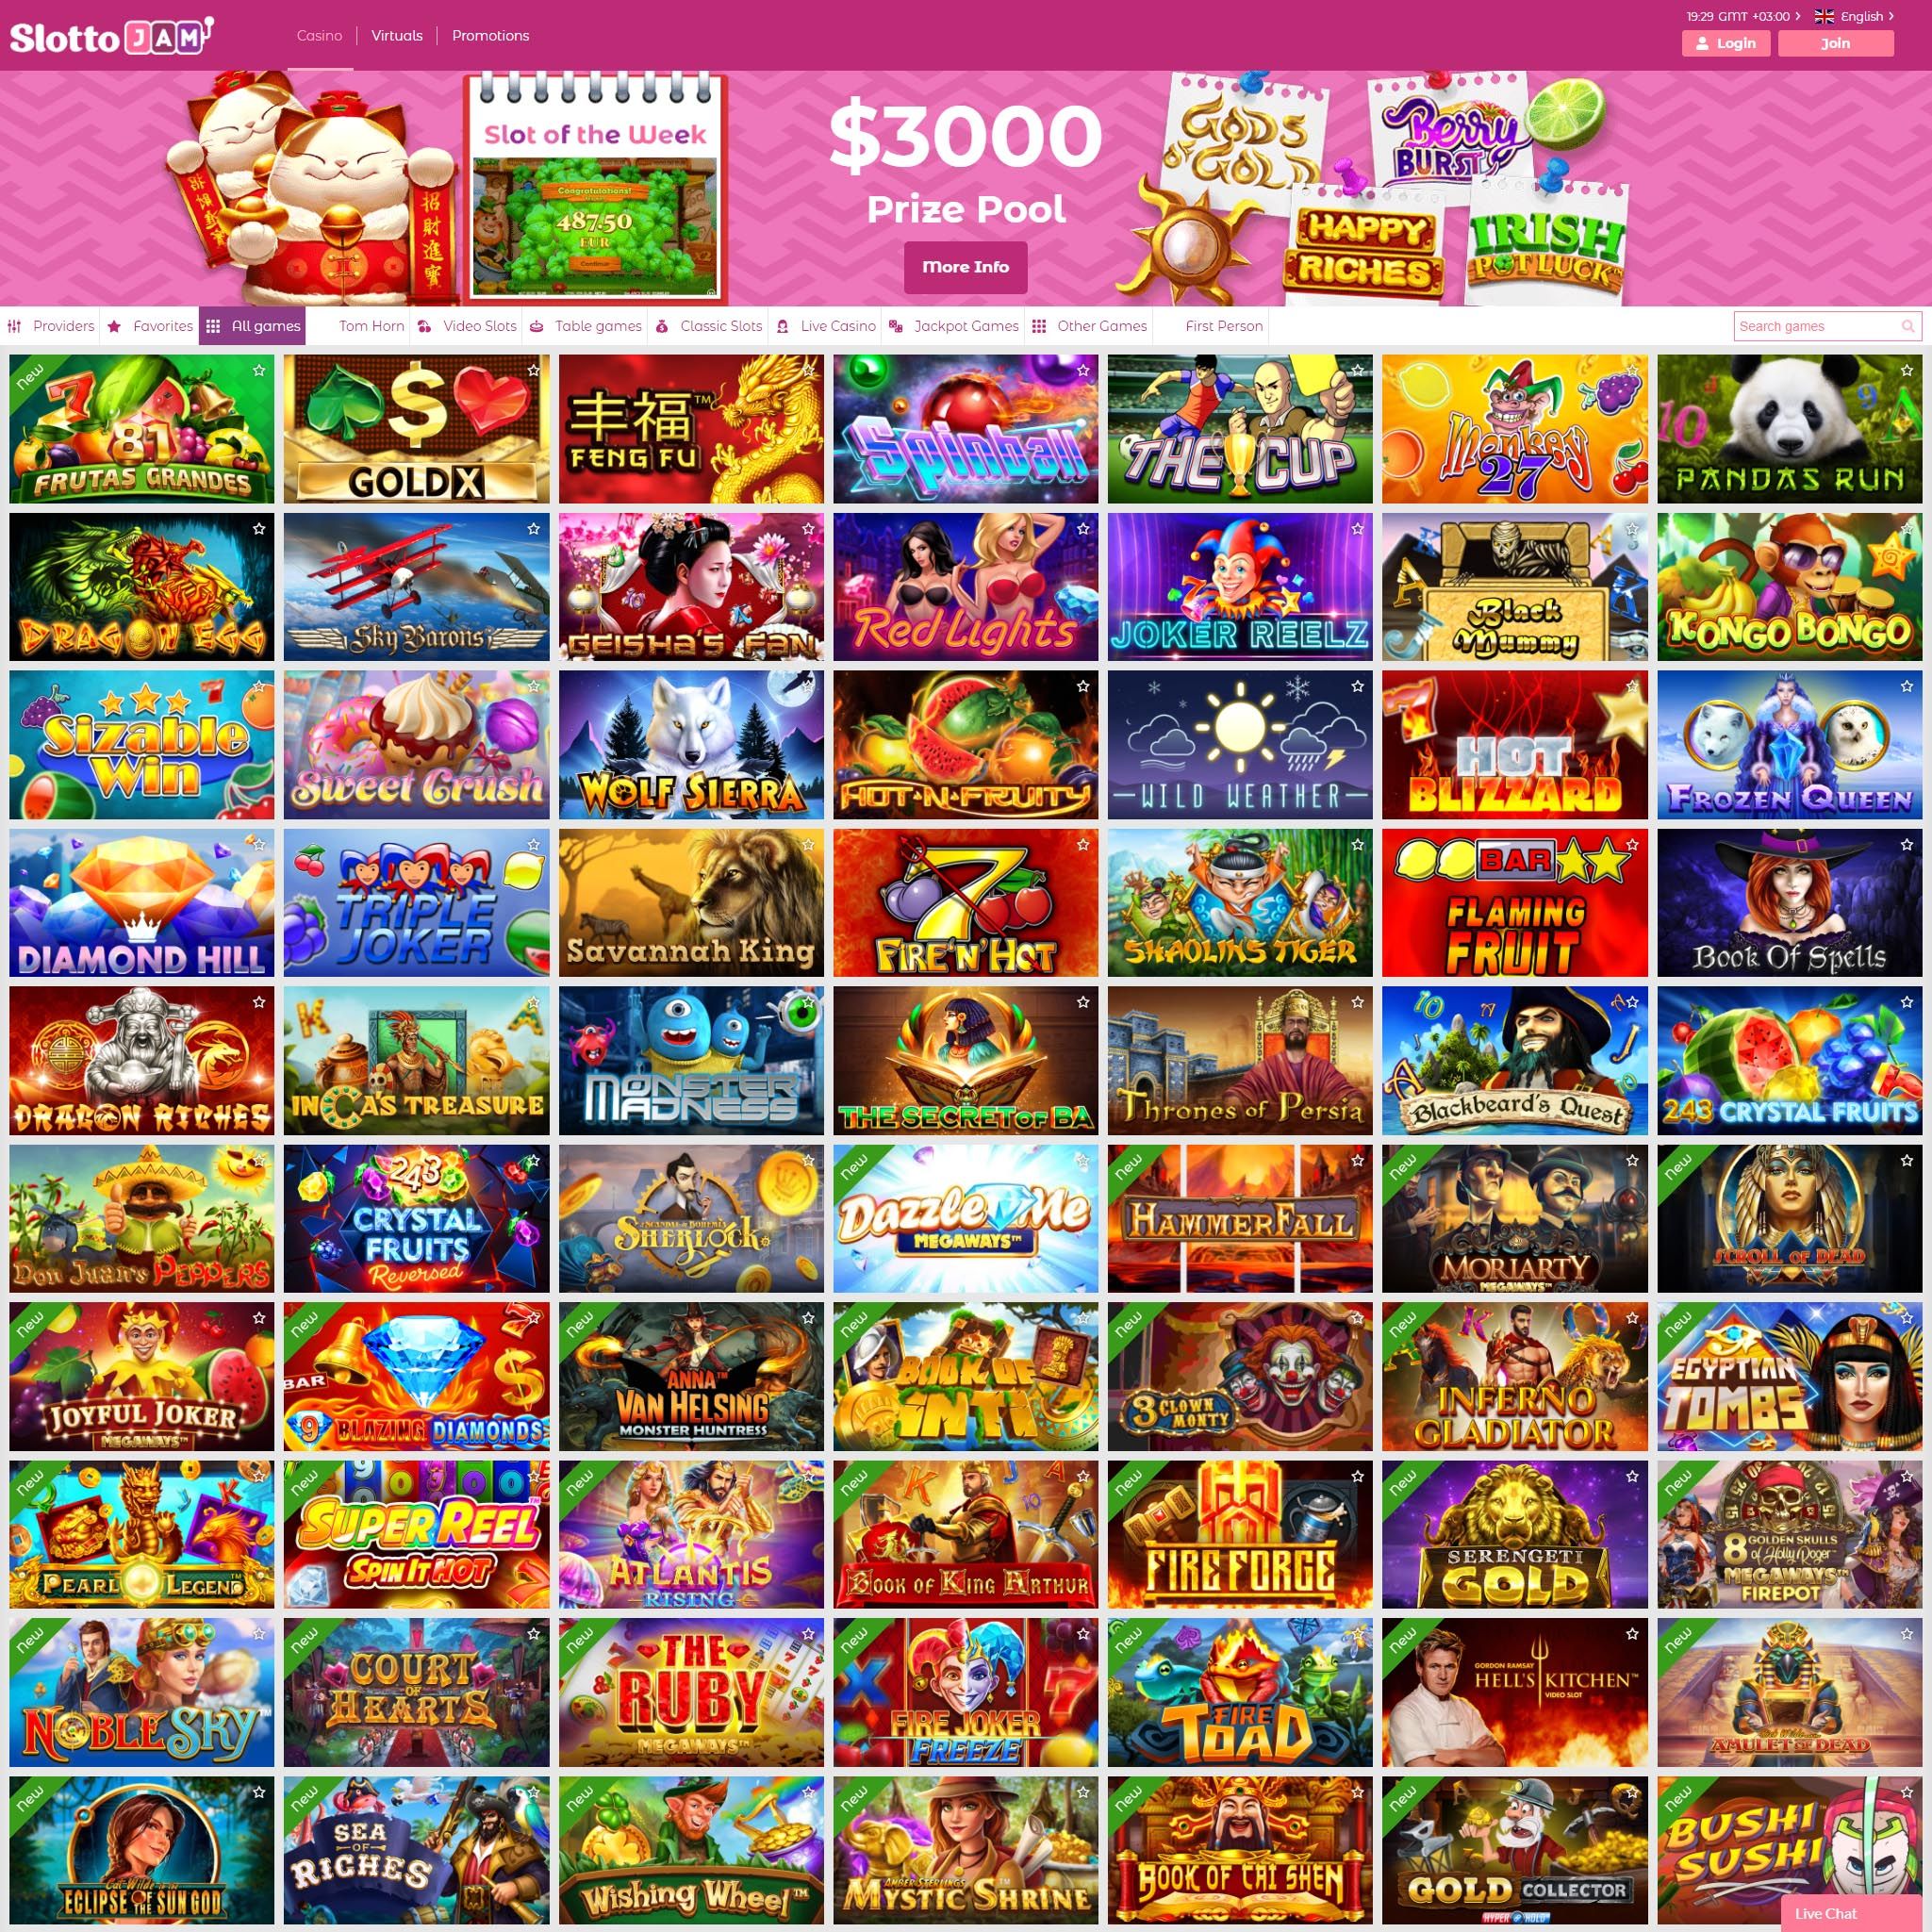 SlottoJAM Casino full games catalogue